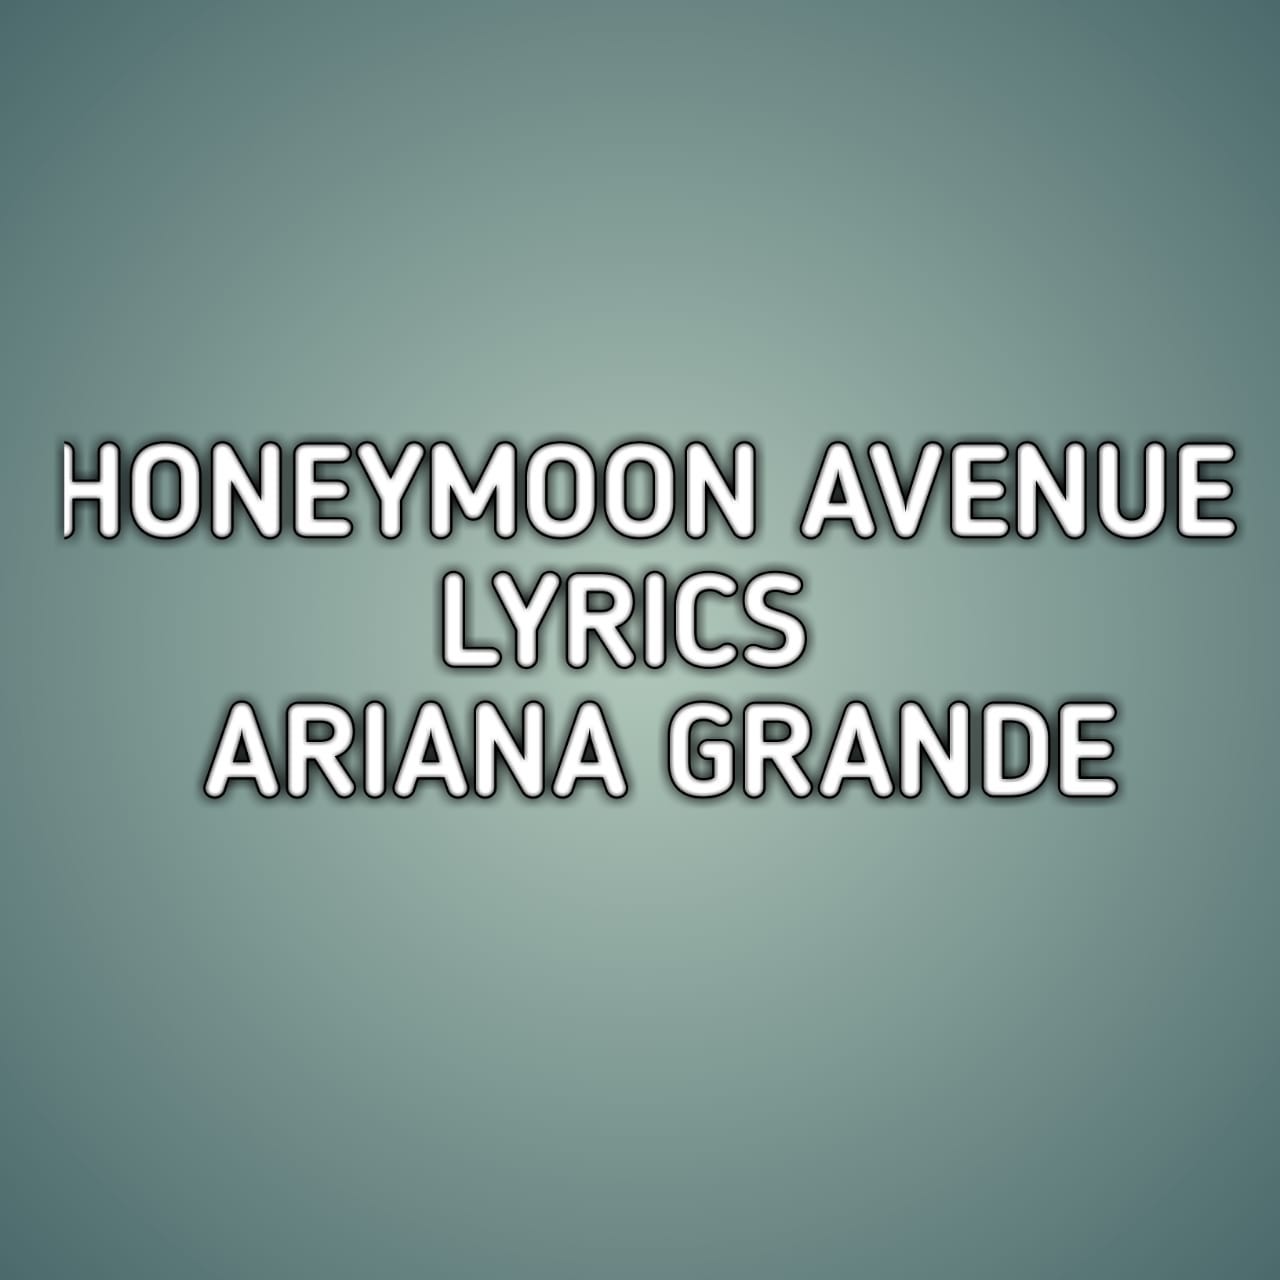 Honeymoon Avenue Lyrics Ariana Grande Thelyricsworld Medium